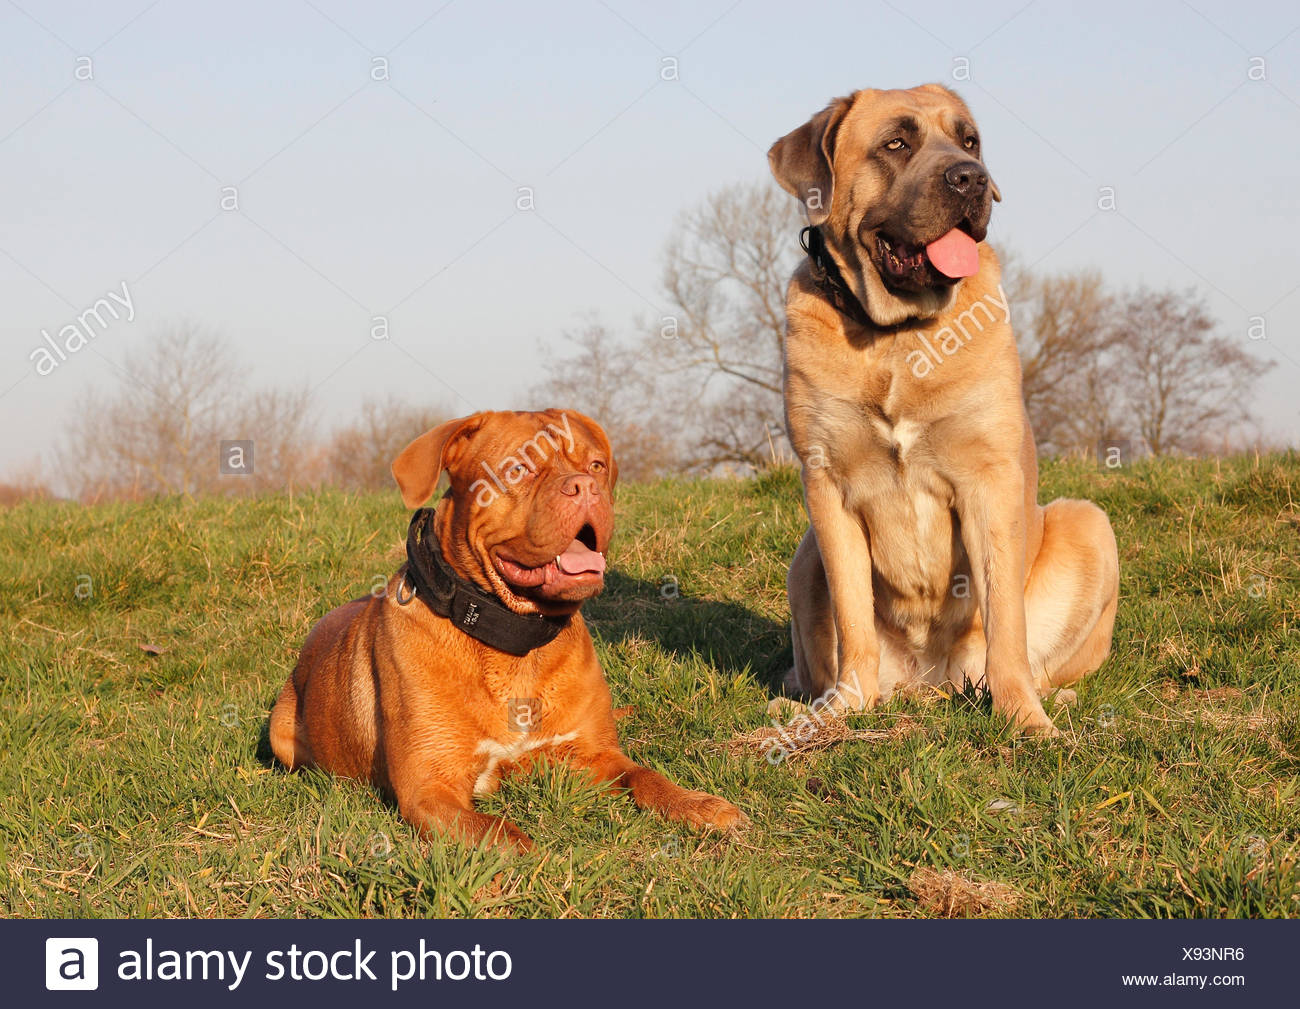 Dogue De Bordeaux Or Bordeaux Mastiff And A Cane Corso